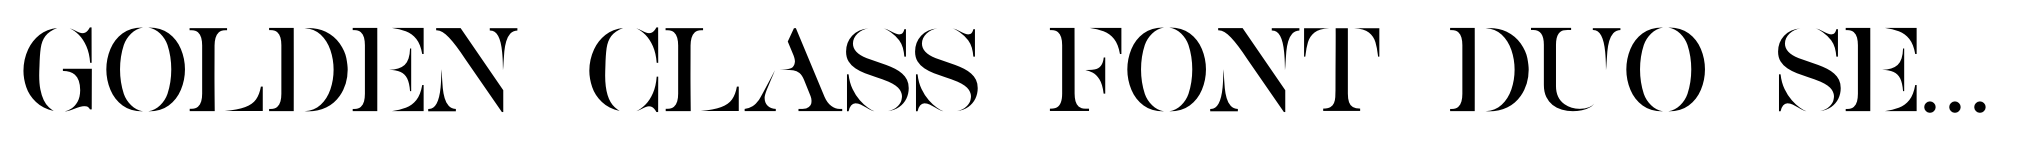 Golden Class Font Duo serif image